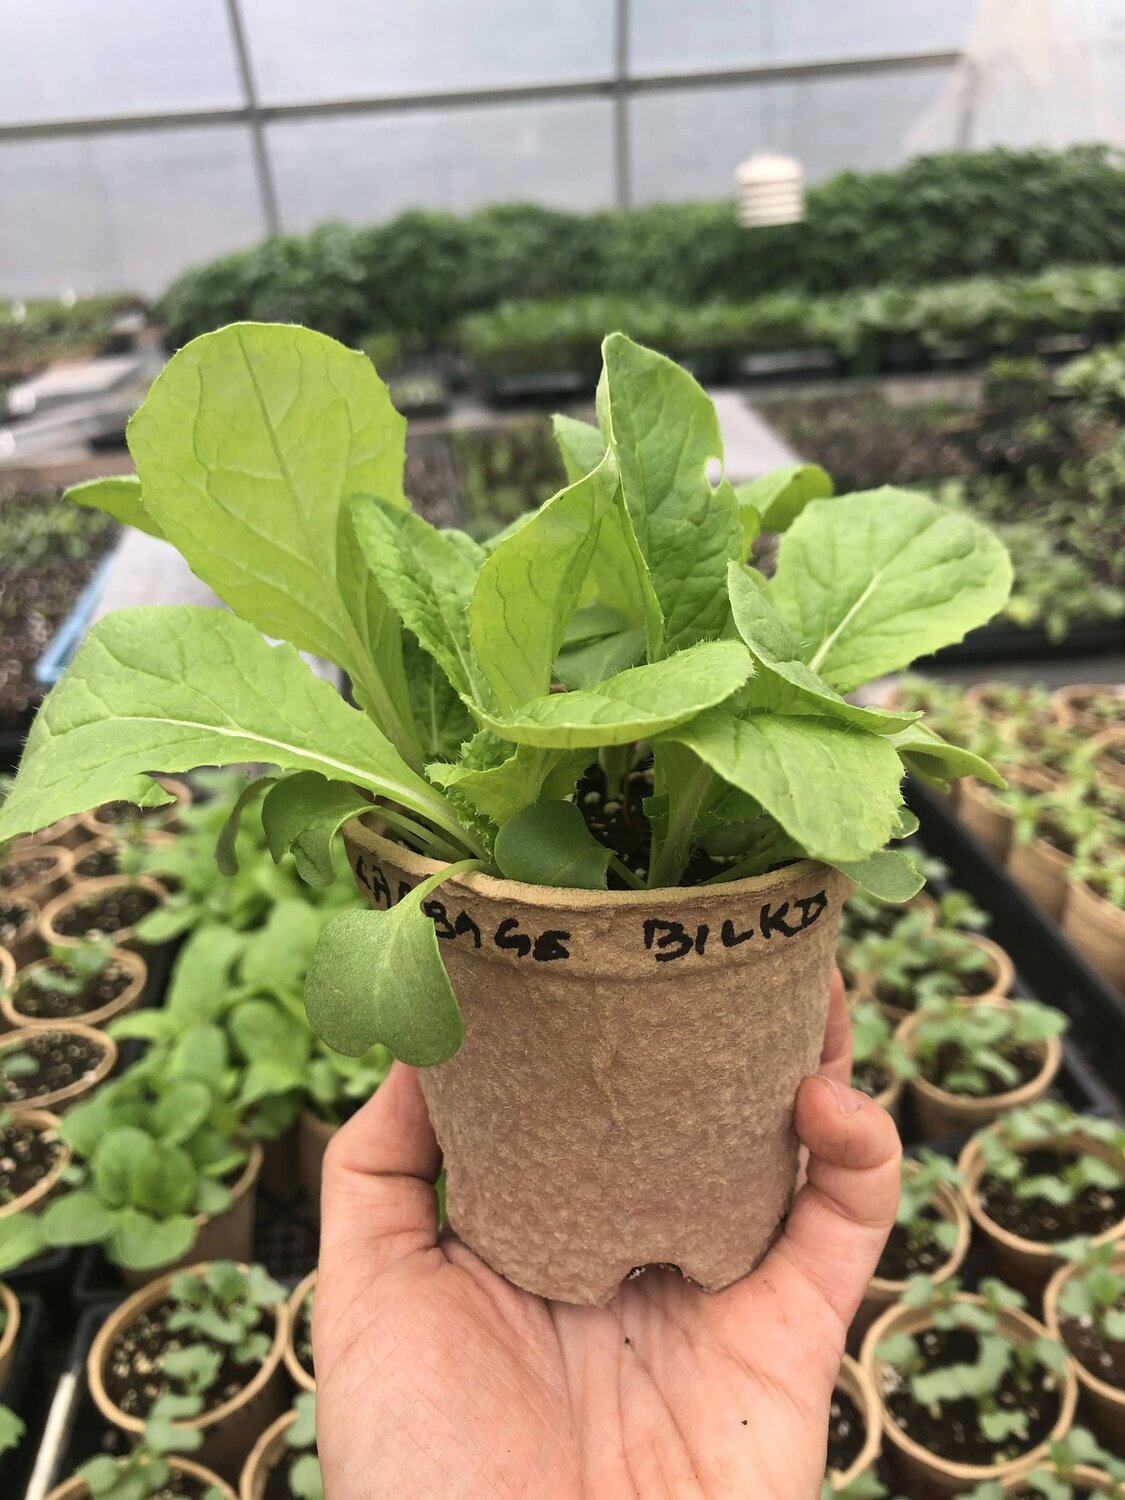 Napa cabbage - var.: bilko (4 to 7 plants per pot)